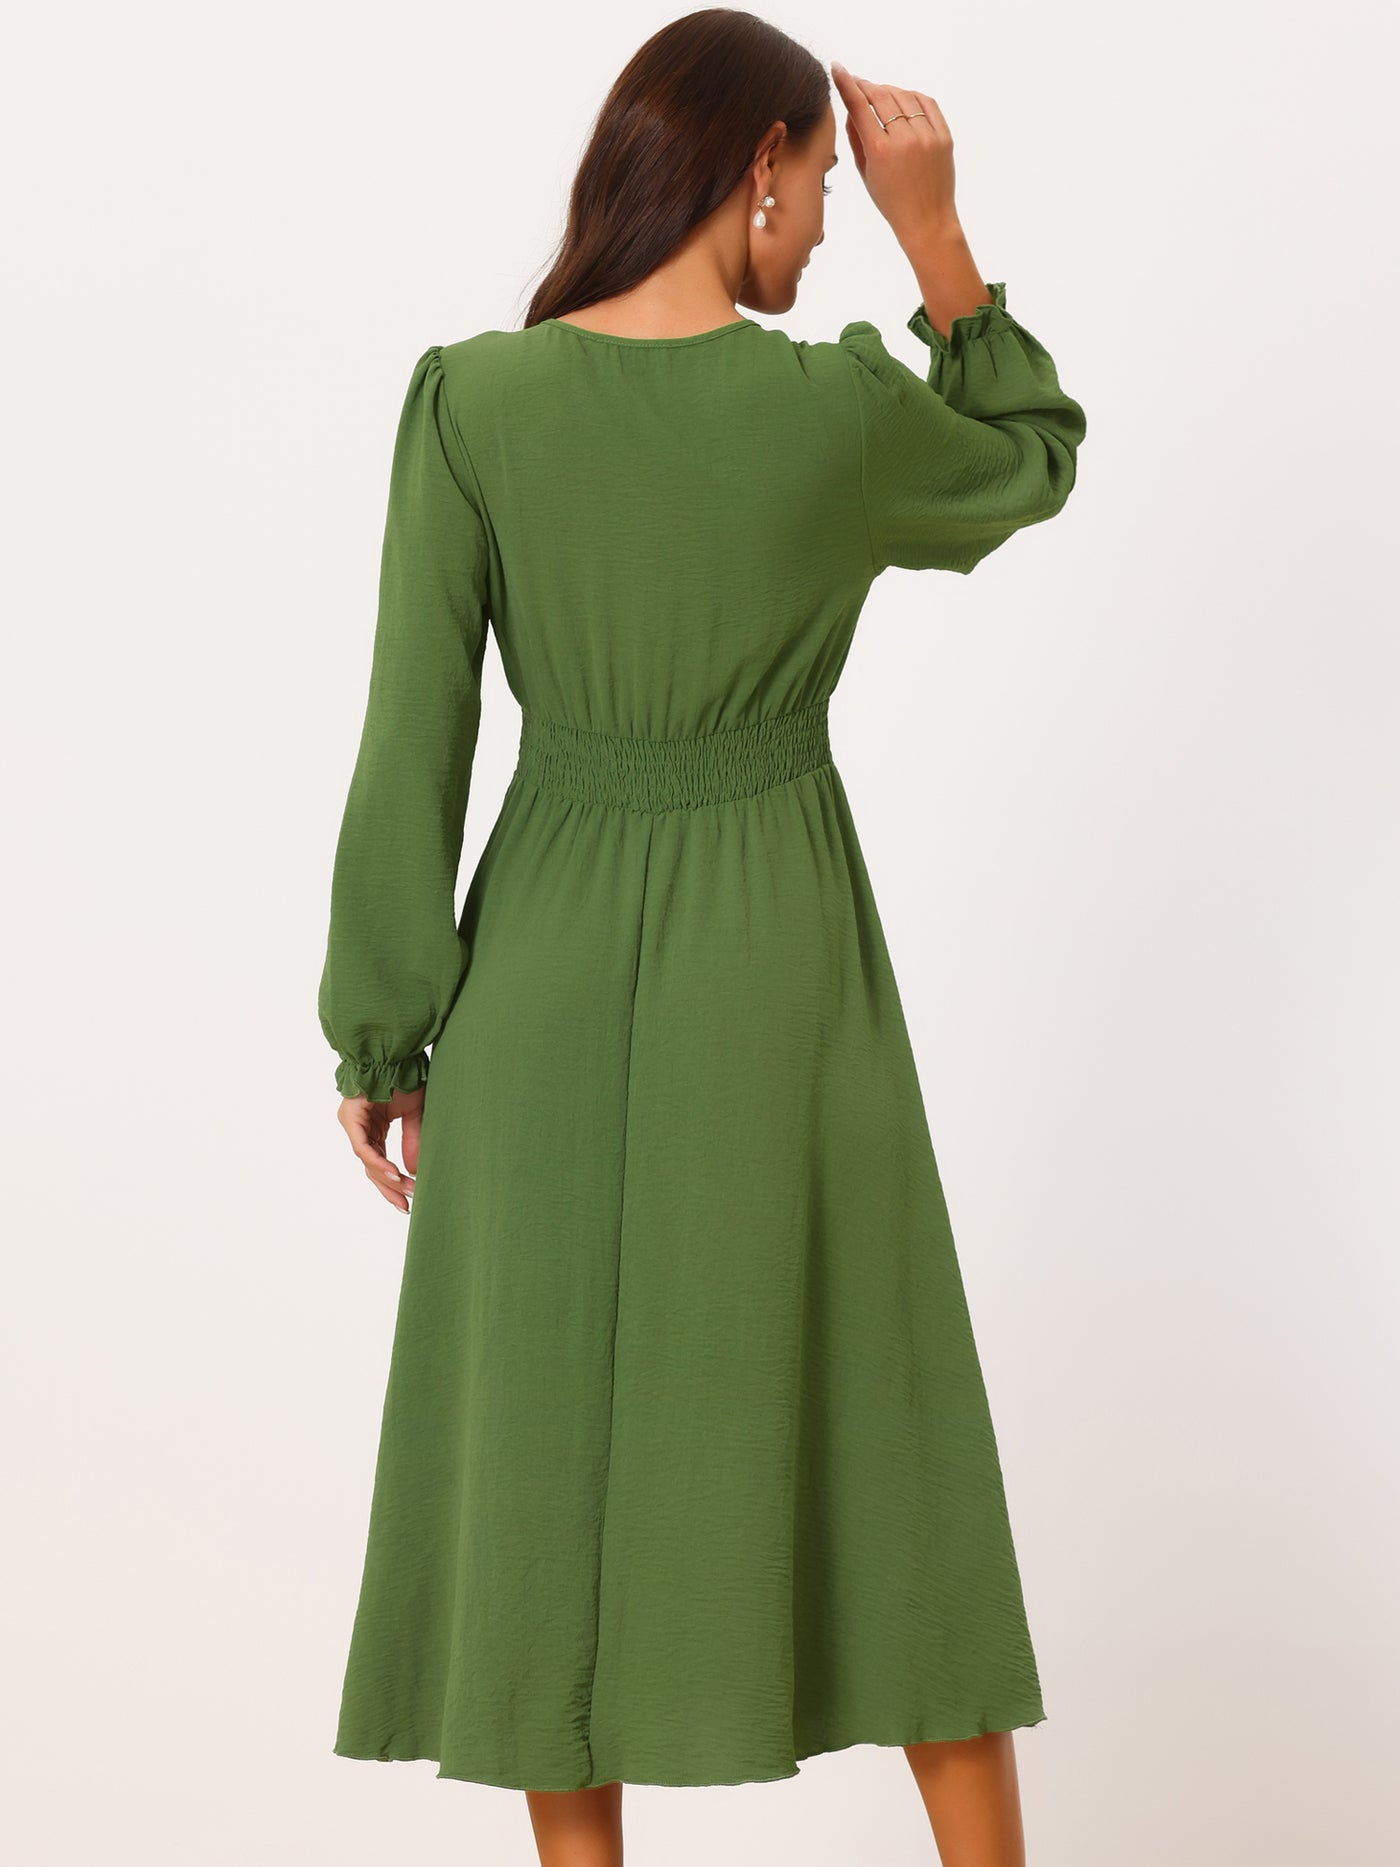 Bublédon Women's Casual Long Sleeve V Neck Vintage Smocked Waist Flowy Midi Dress